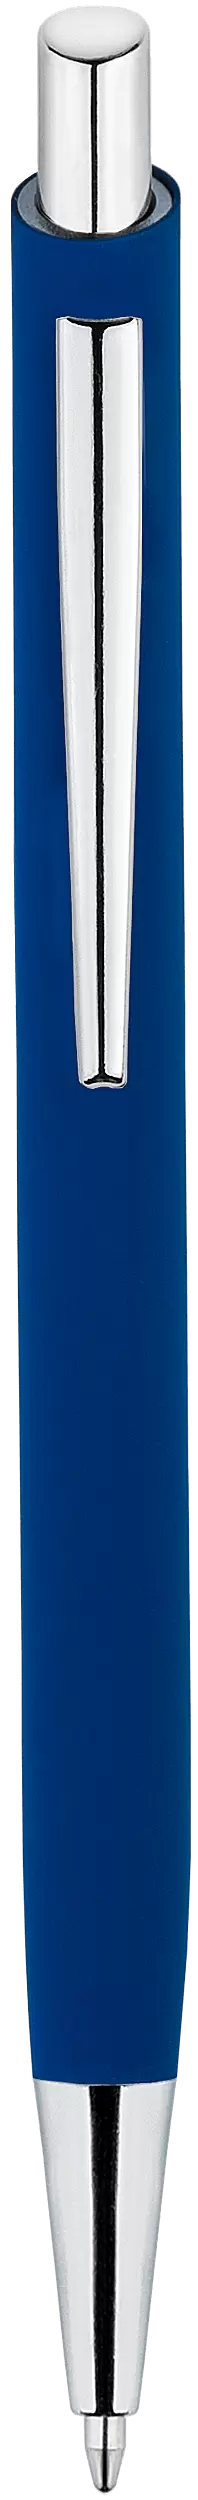 Ручка ELFARO SOFT Синяя 3053-01